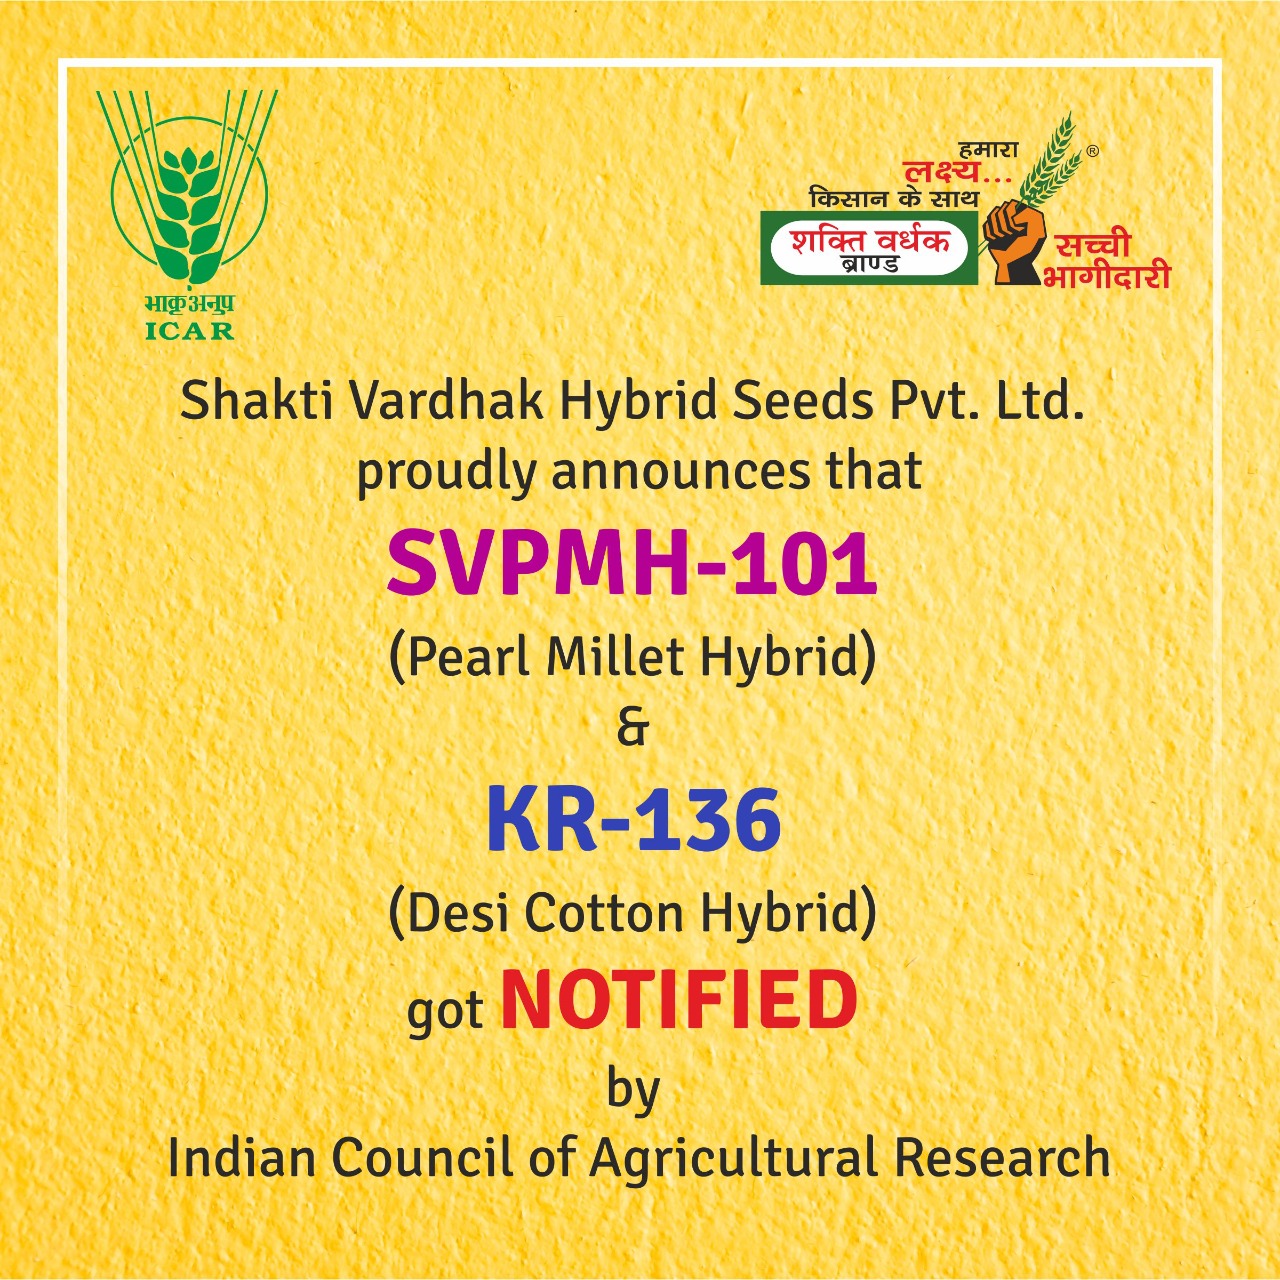 ICAR, Government of India notifies 2 hybrids of Shakti Vardhak Hybrid Seeds